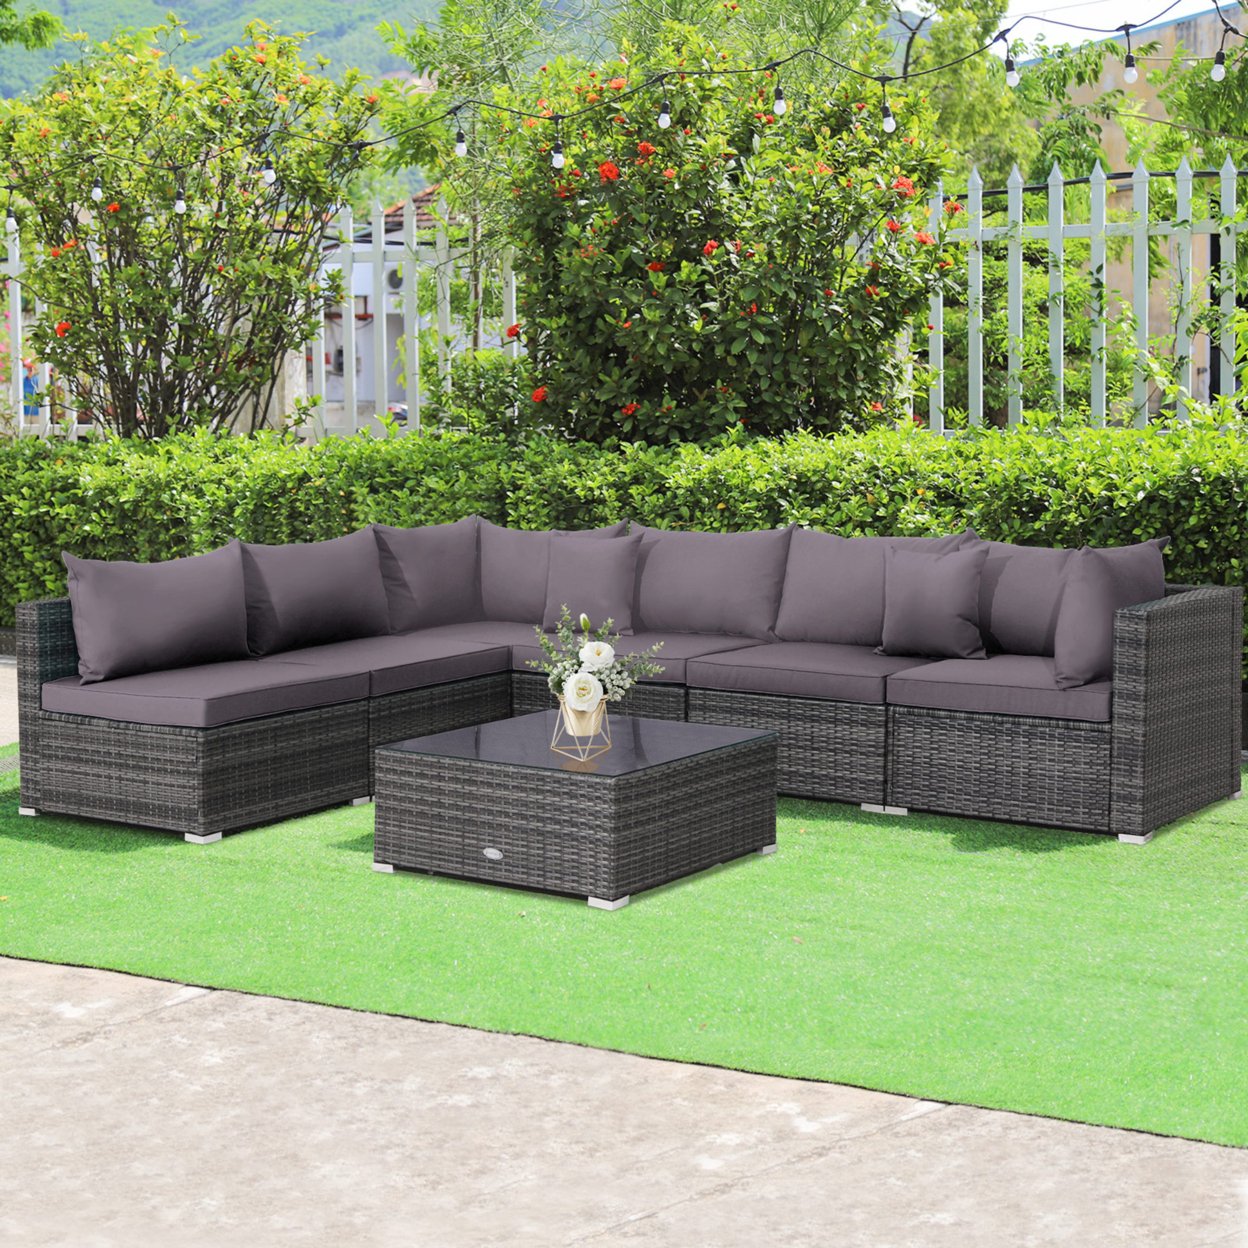 7PCS Patio Rattan Sectional Sofa Set Outdoor Furniture Set W/ Cushions - Grey